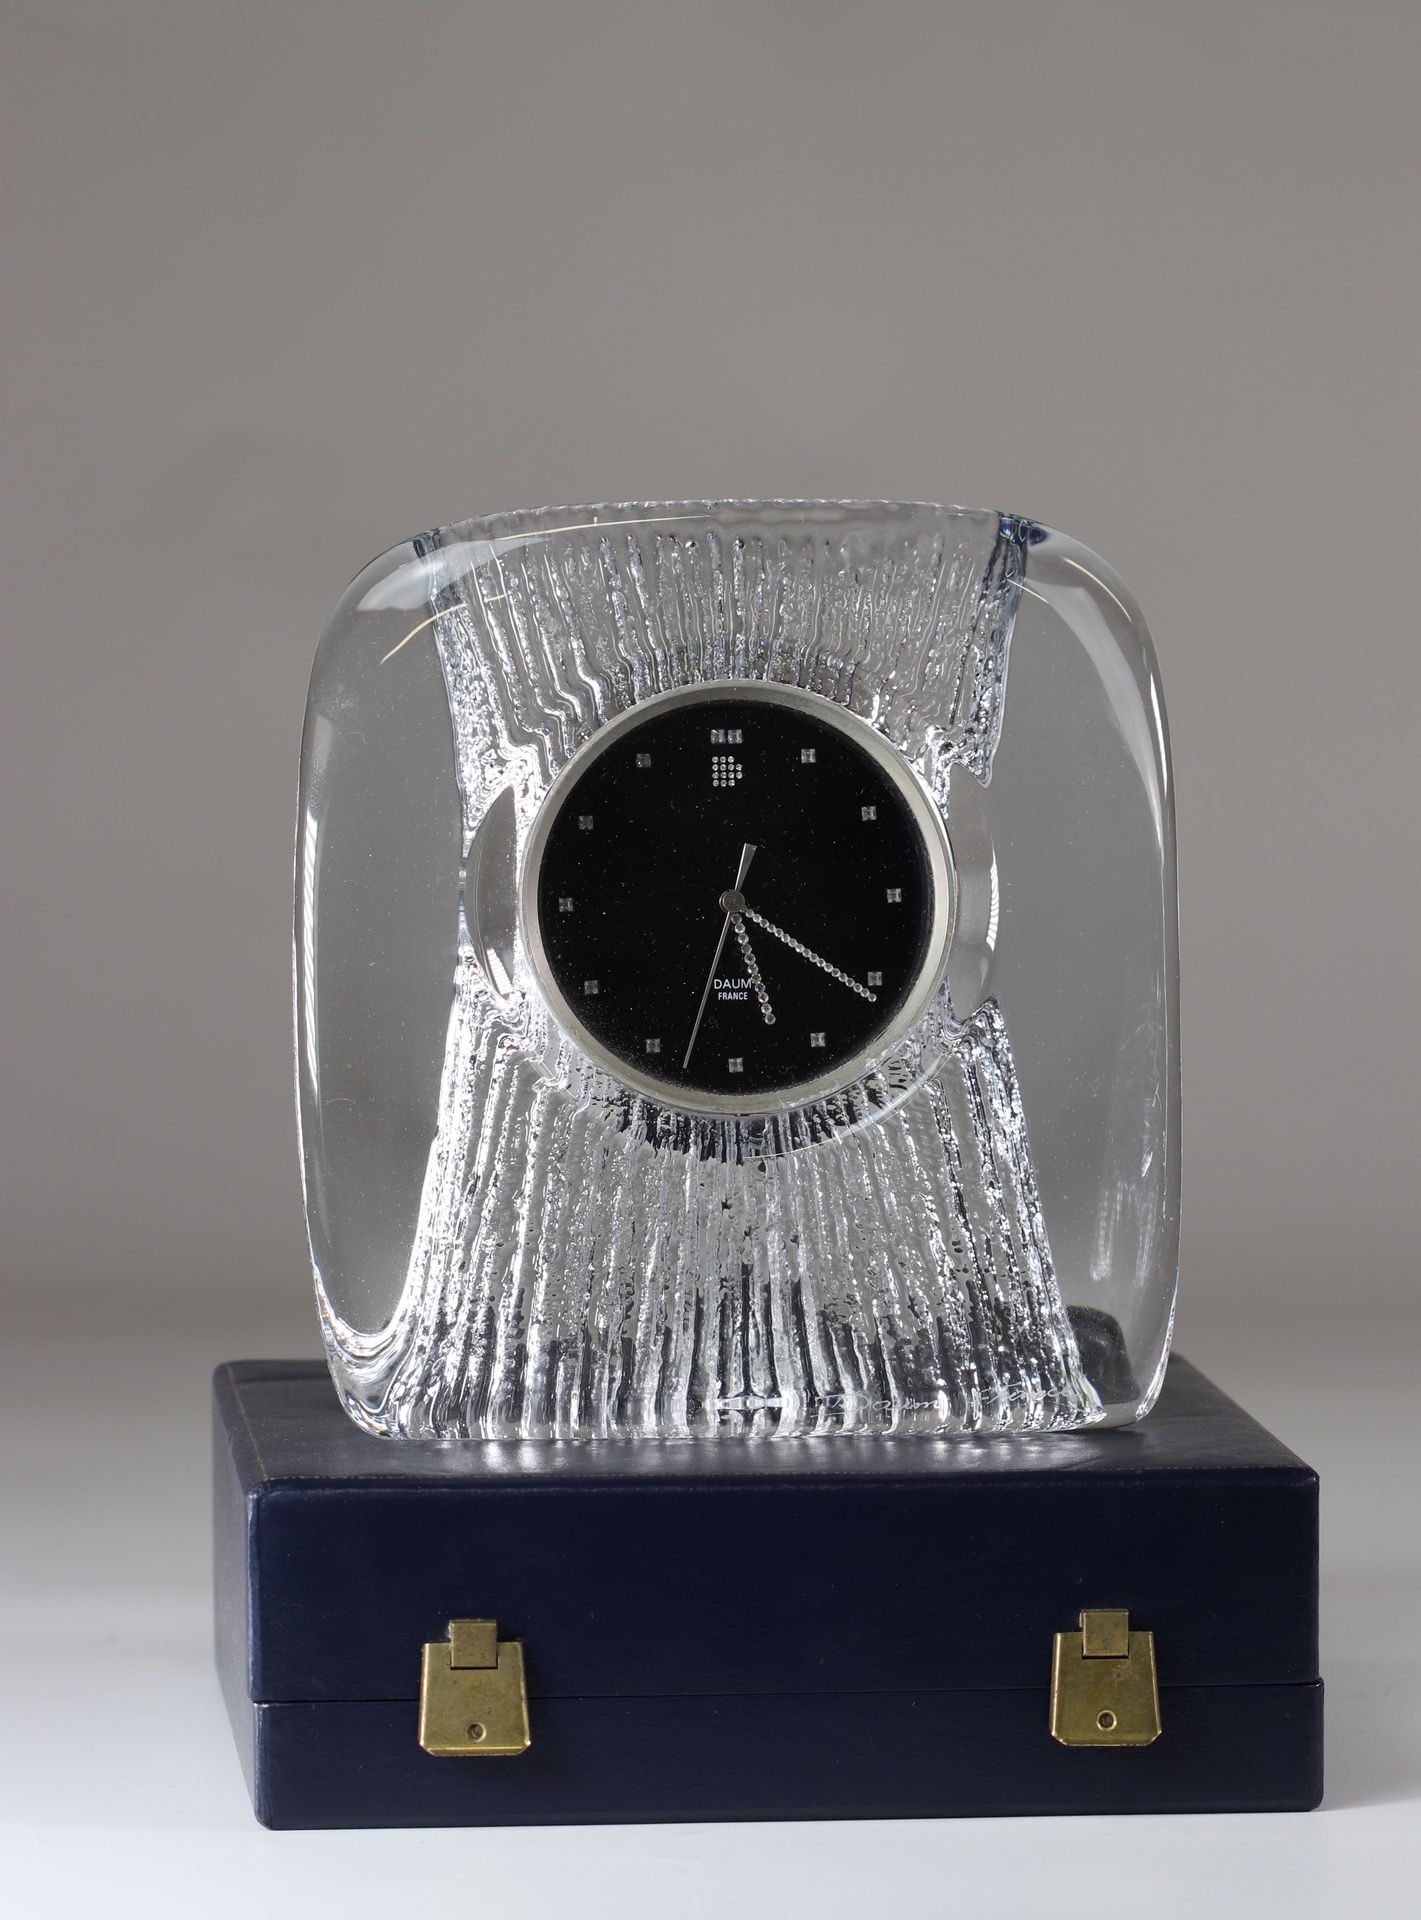 Pendule Daum Nancy dans son coffret Daum Nancy clock in its box
Dimensions: H=70&hellip;